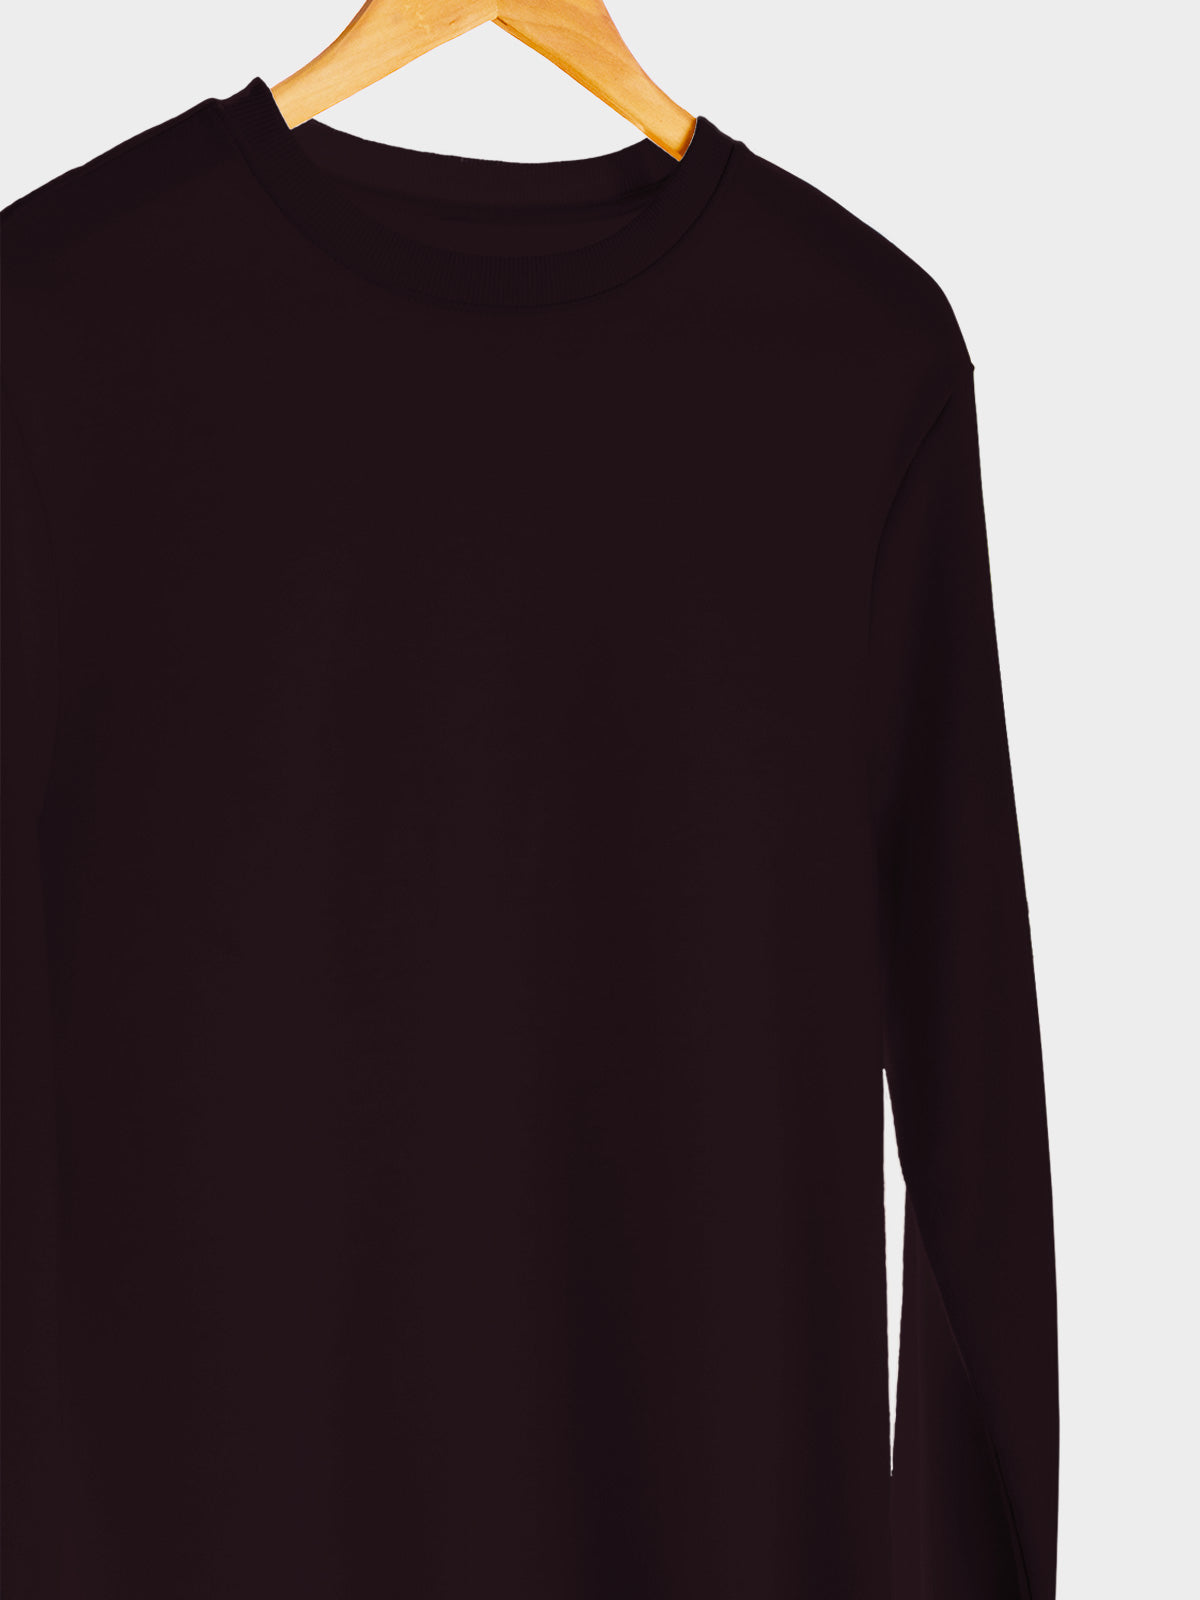 Wine | Unisex Plain Sweatshirt